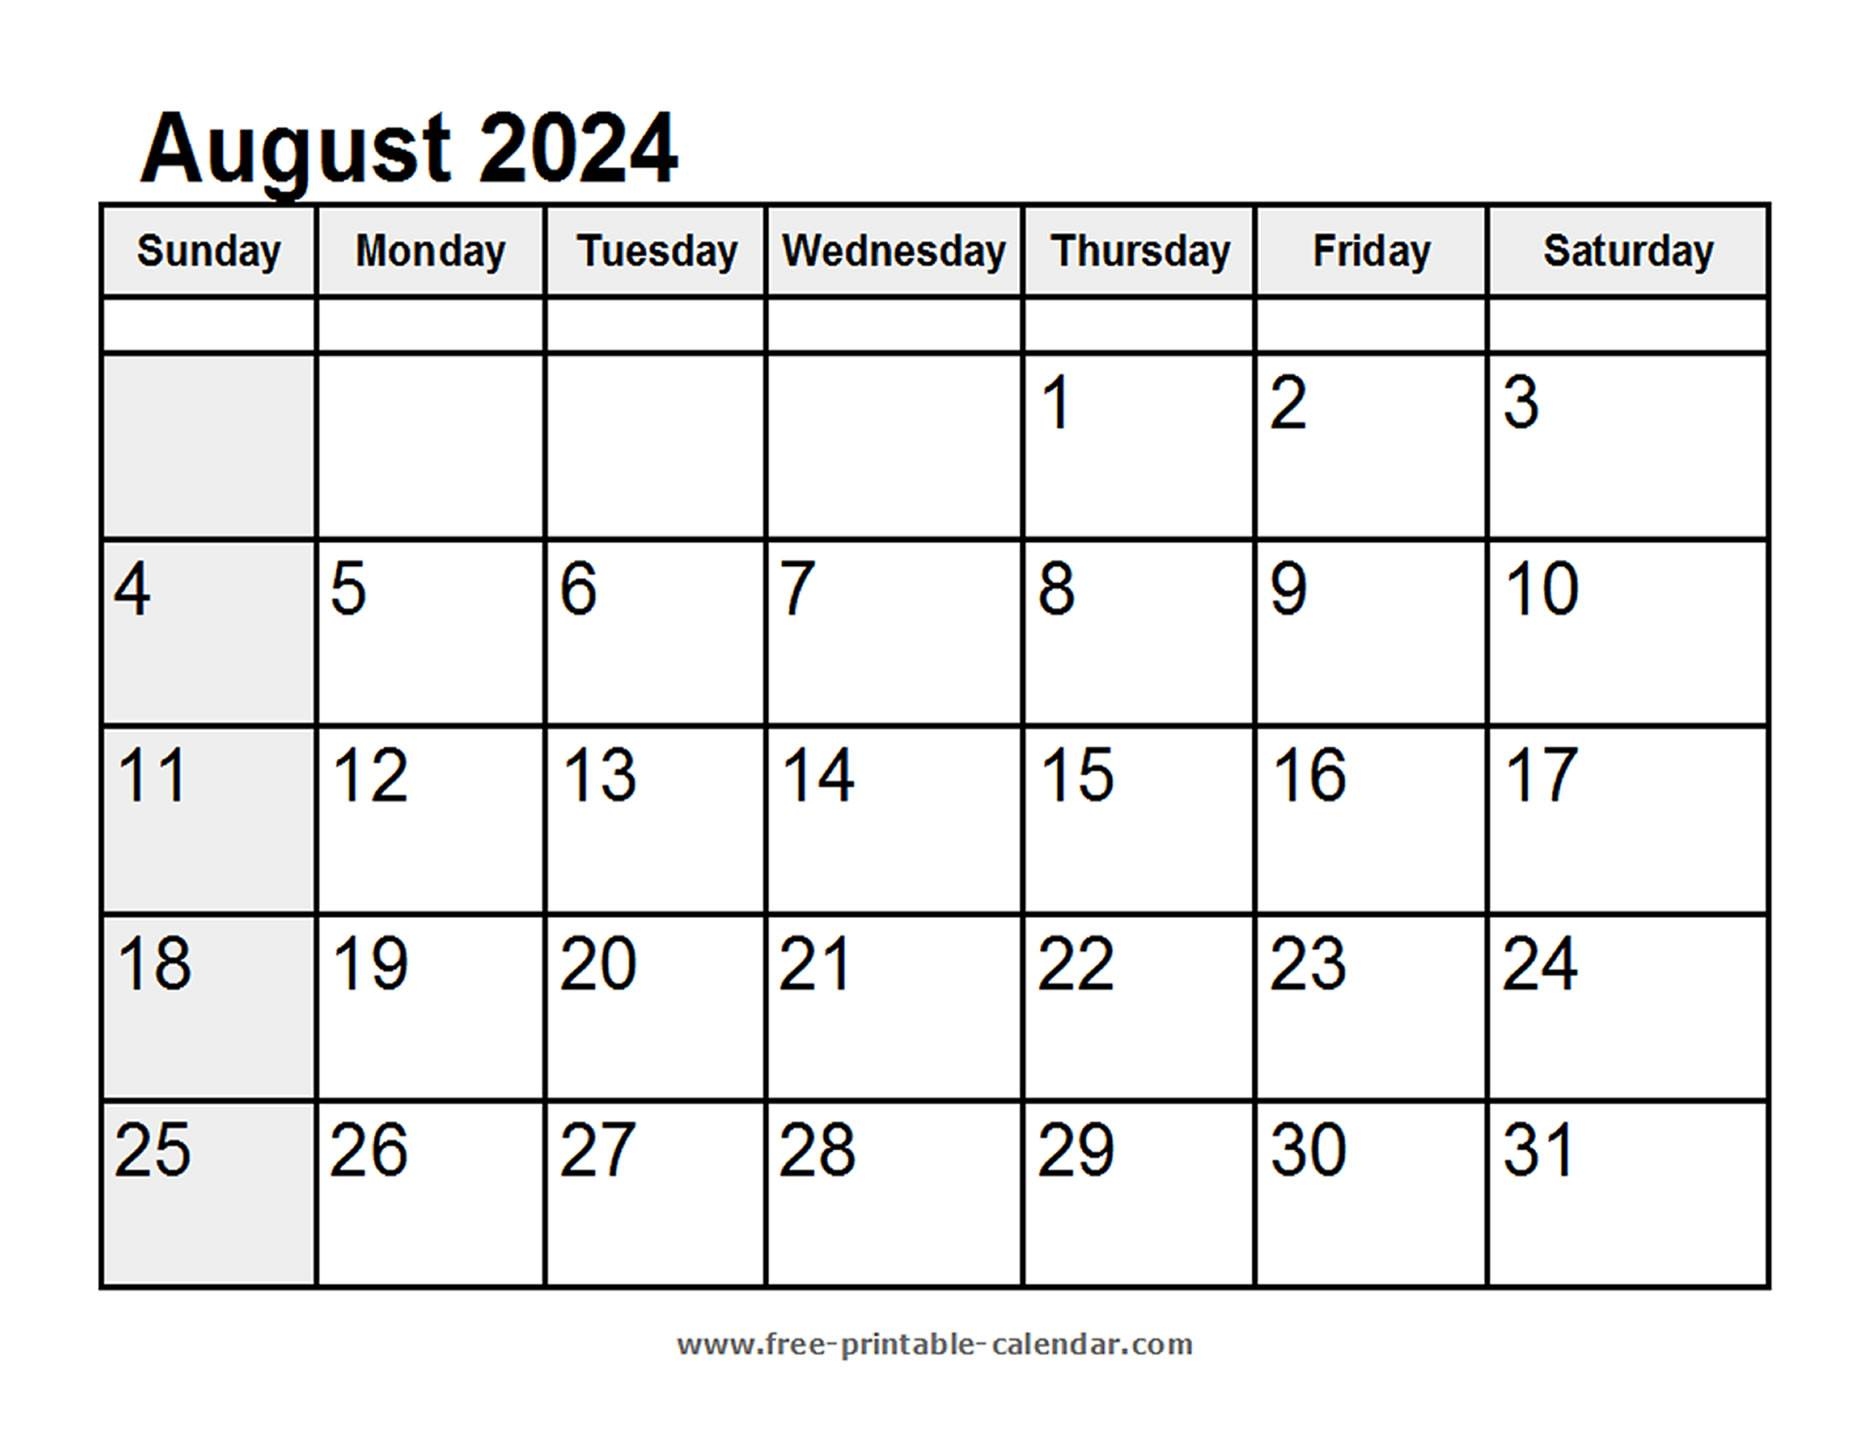 Calendar August 2024 - Free-Printable-Calendar in Free Printable August 2024 Calendar With Holidays